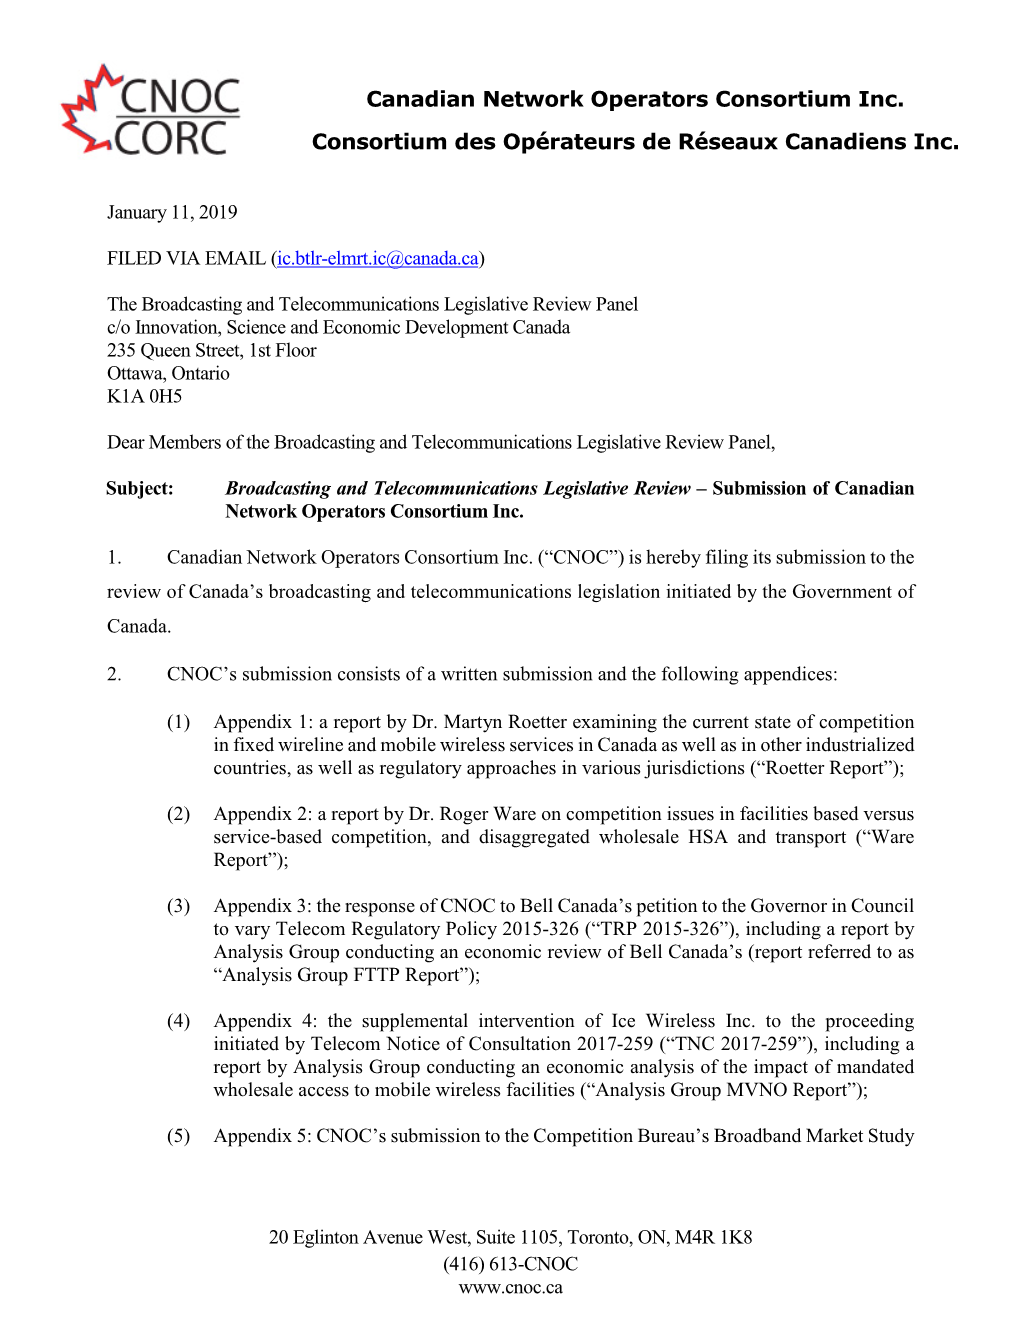 Submission of Canadian Network Operators Consortium Inc